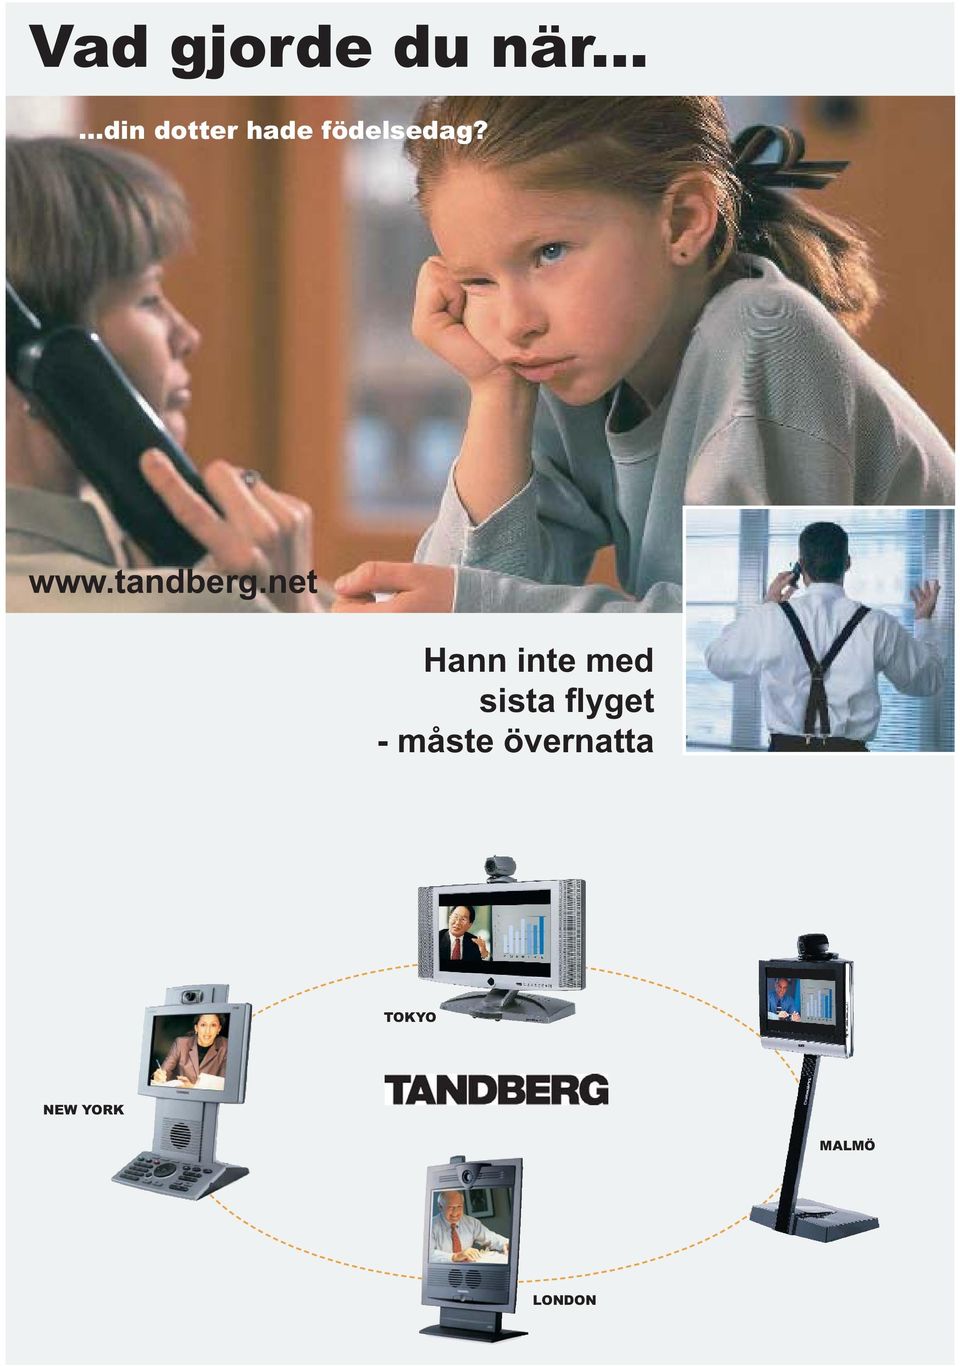 www.tandberg.